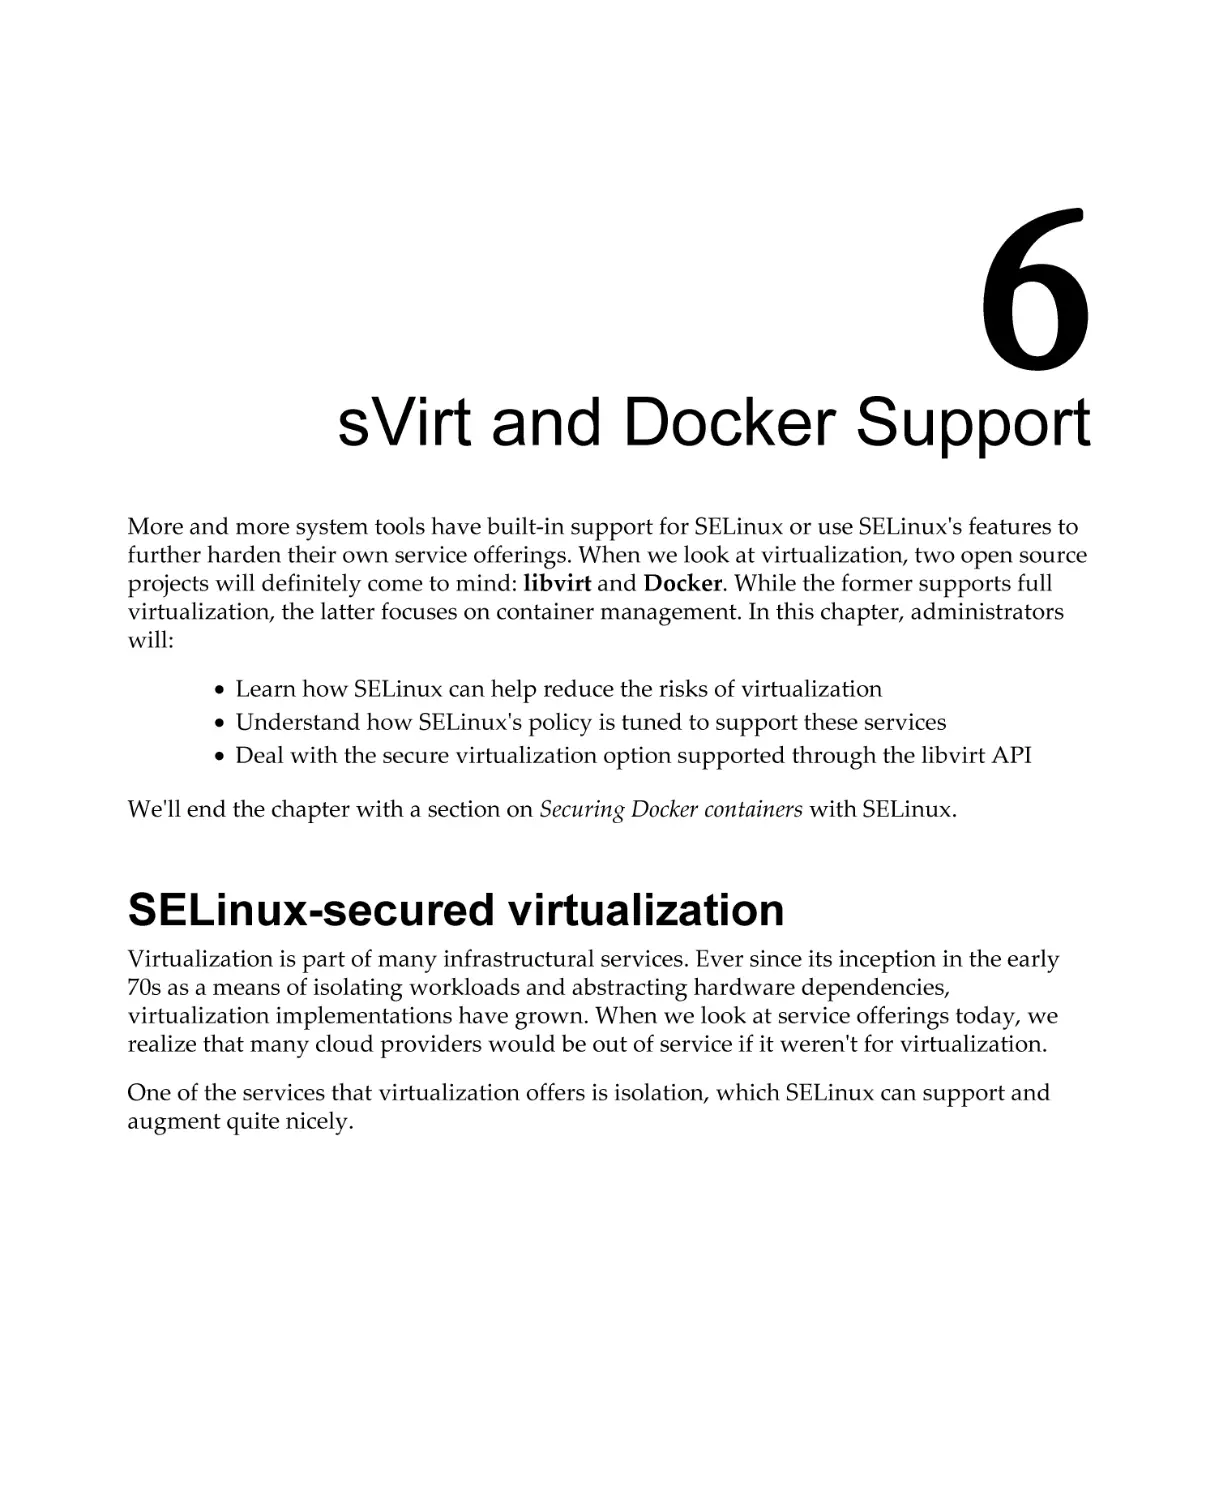 Chapter 6
SELinux-secured virtualization